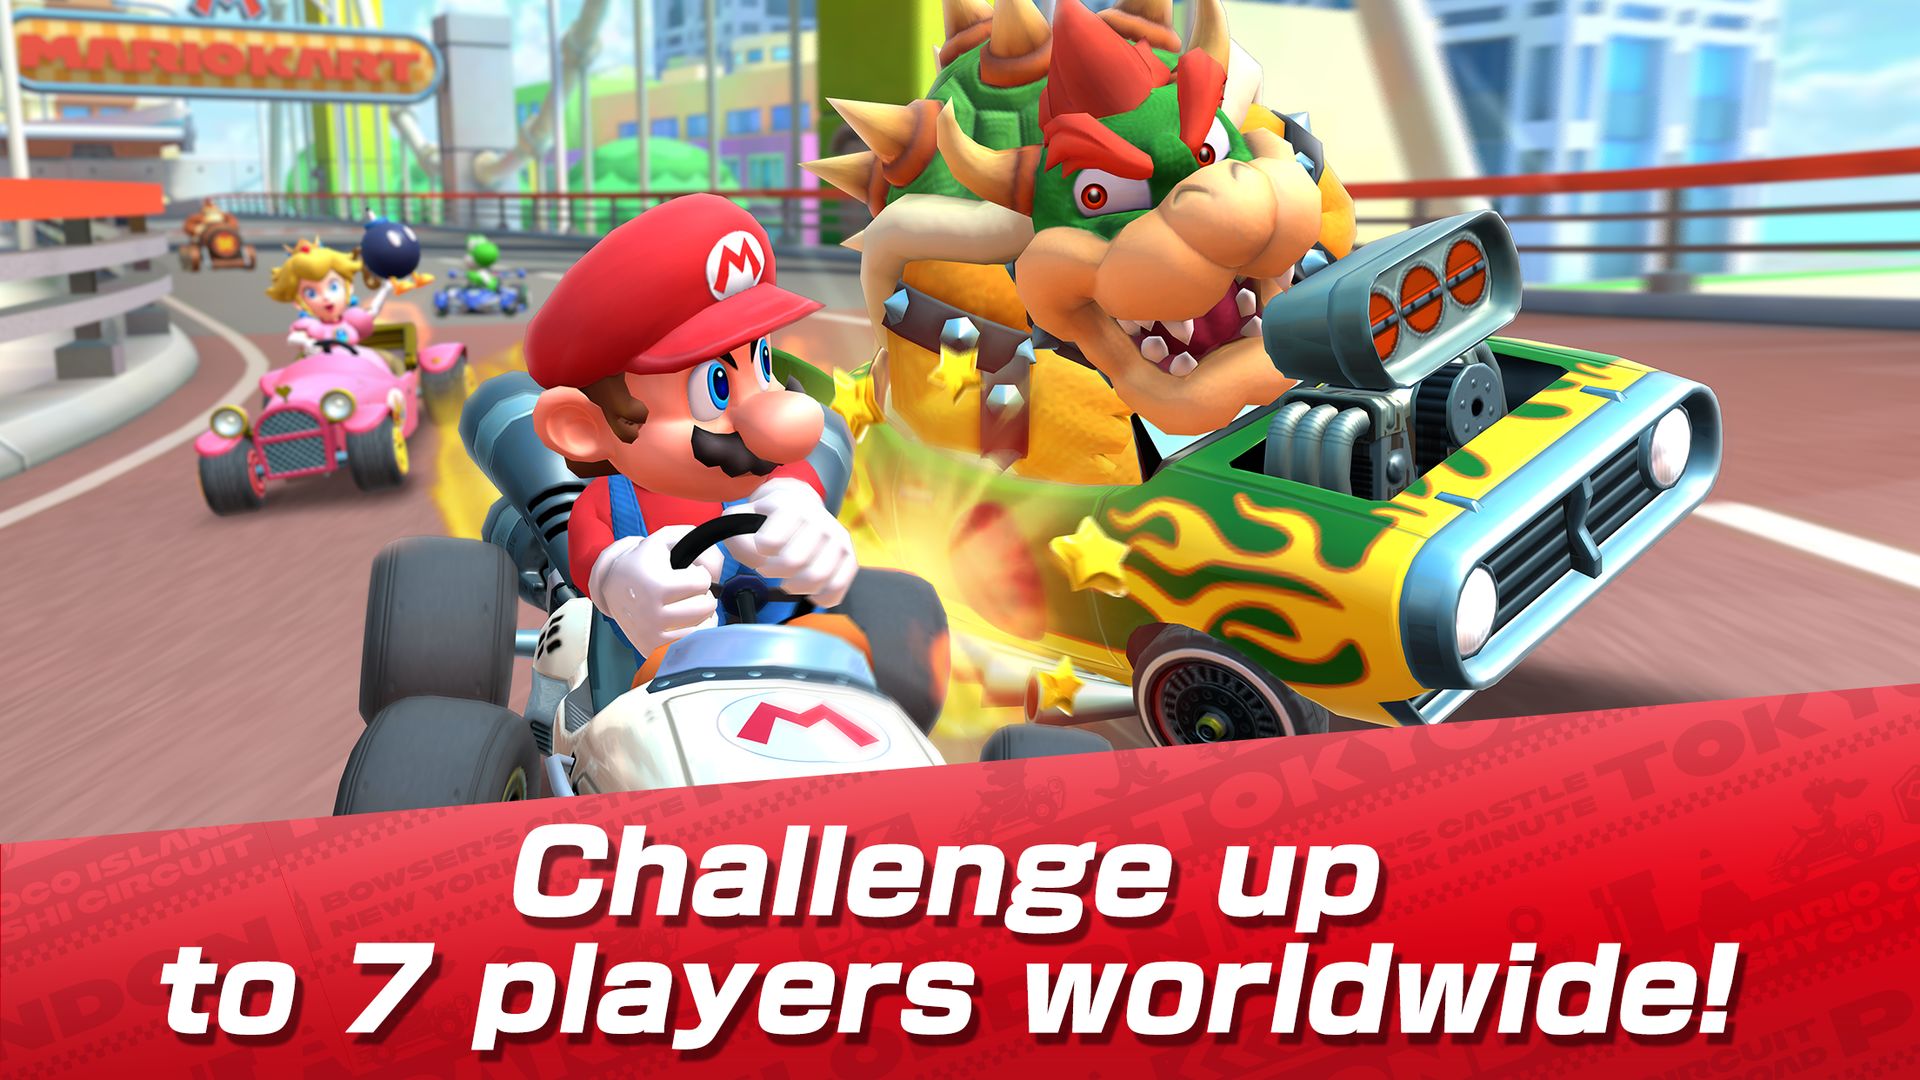 Screenshot of Mario Kart Tour